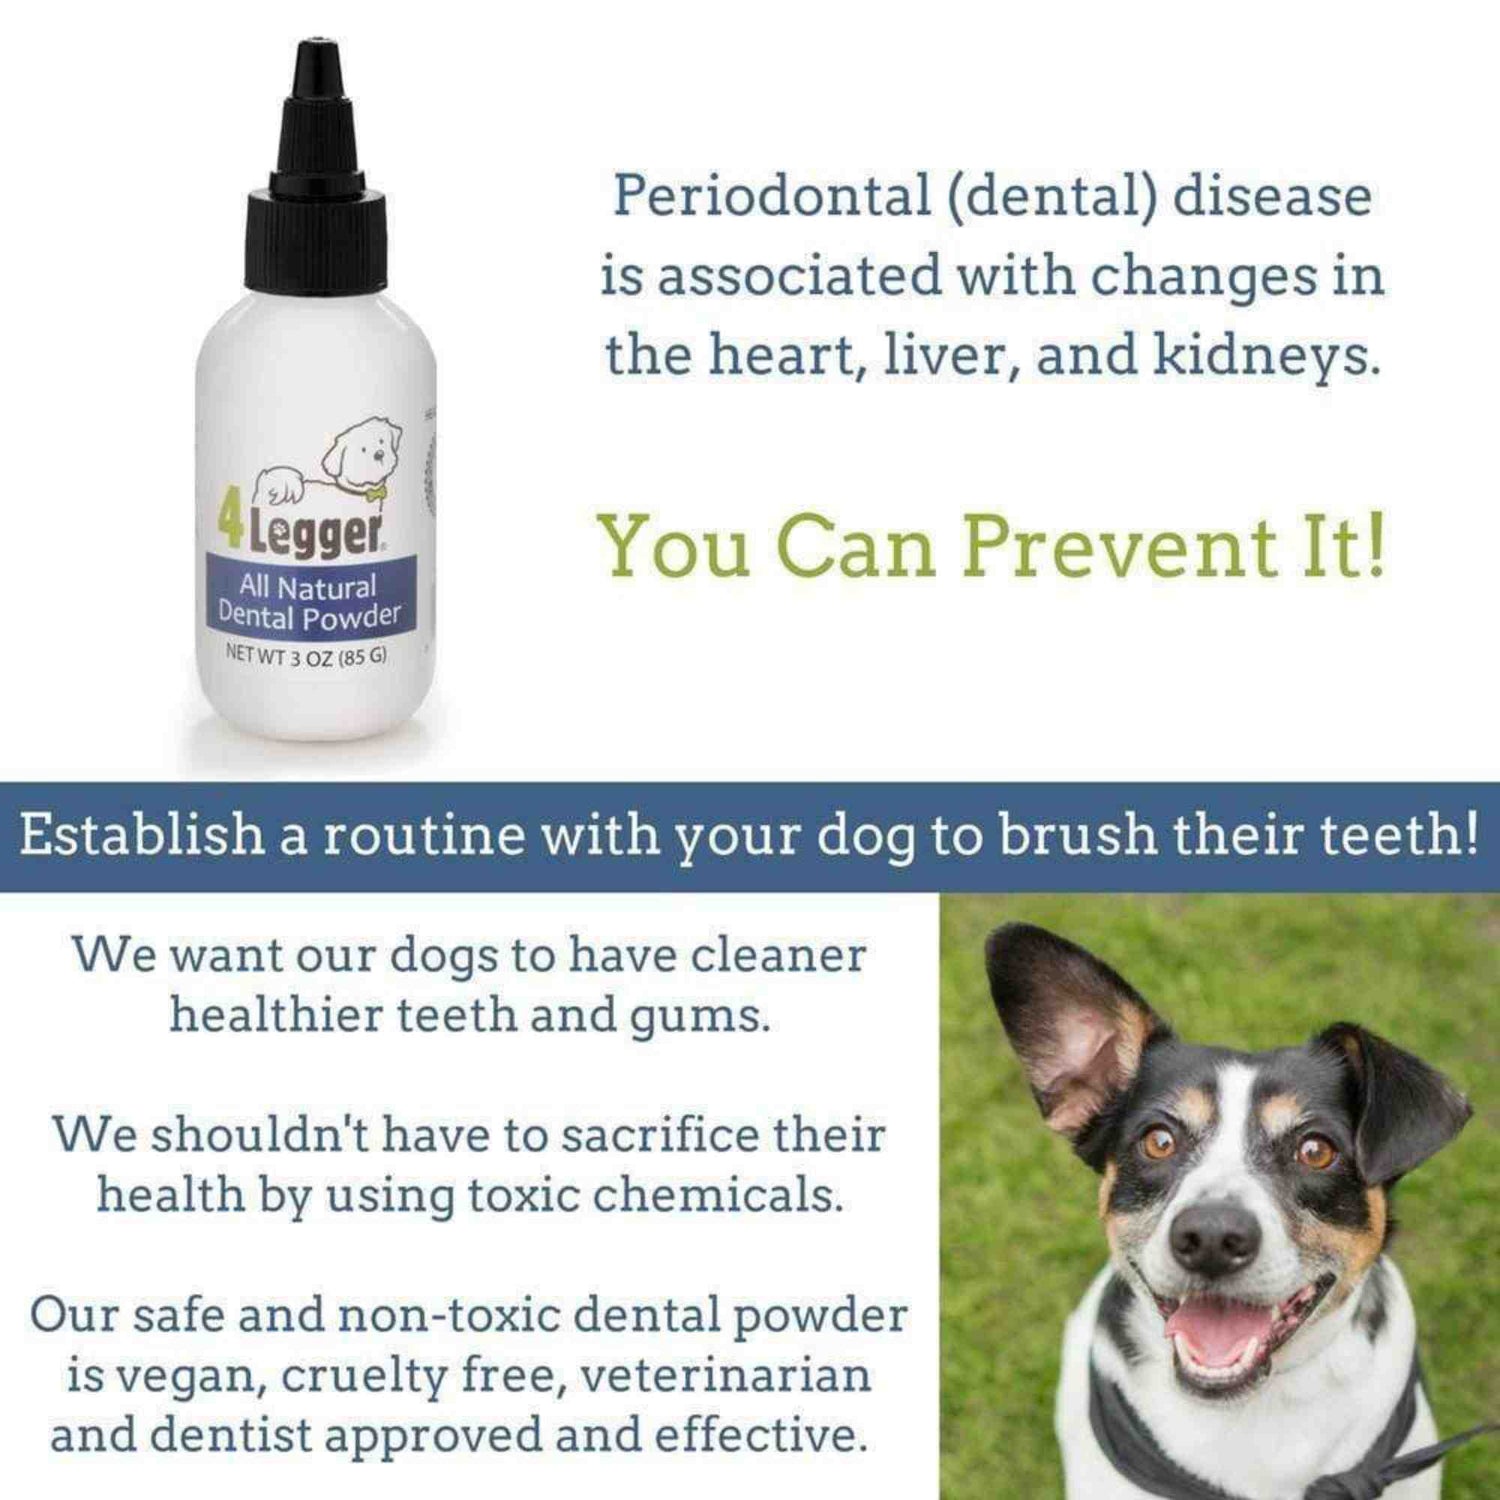 4-legger-dental-care-mint-fresh-all-natural-dental-powder-safe-non-toxic-vegan-toothpaste-alternative periodontal gum disease information